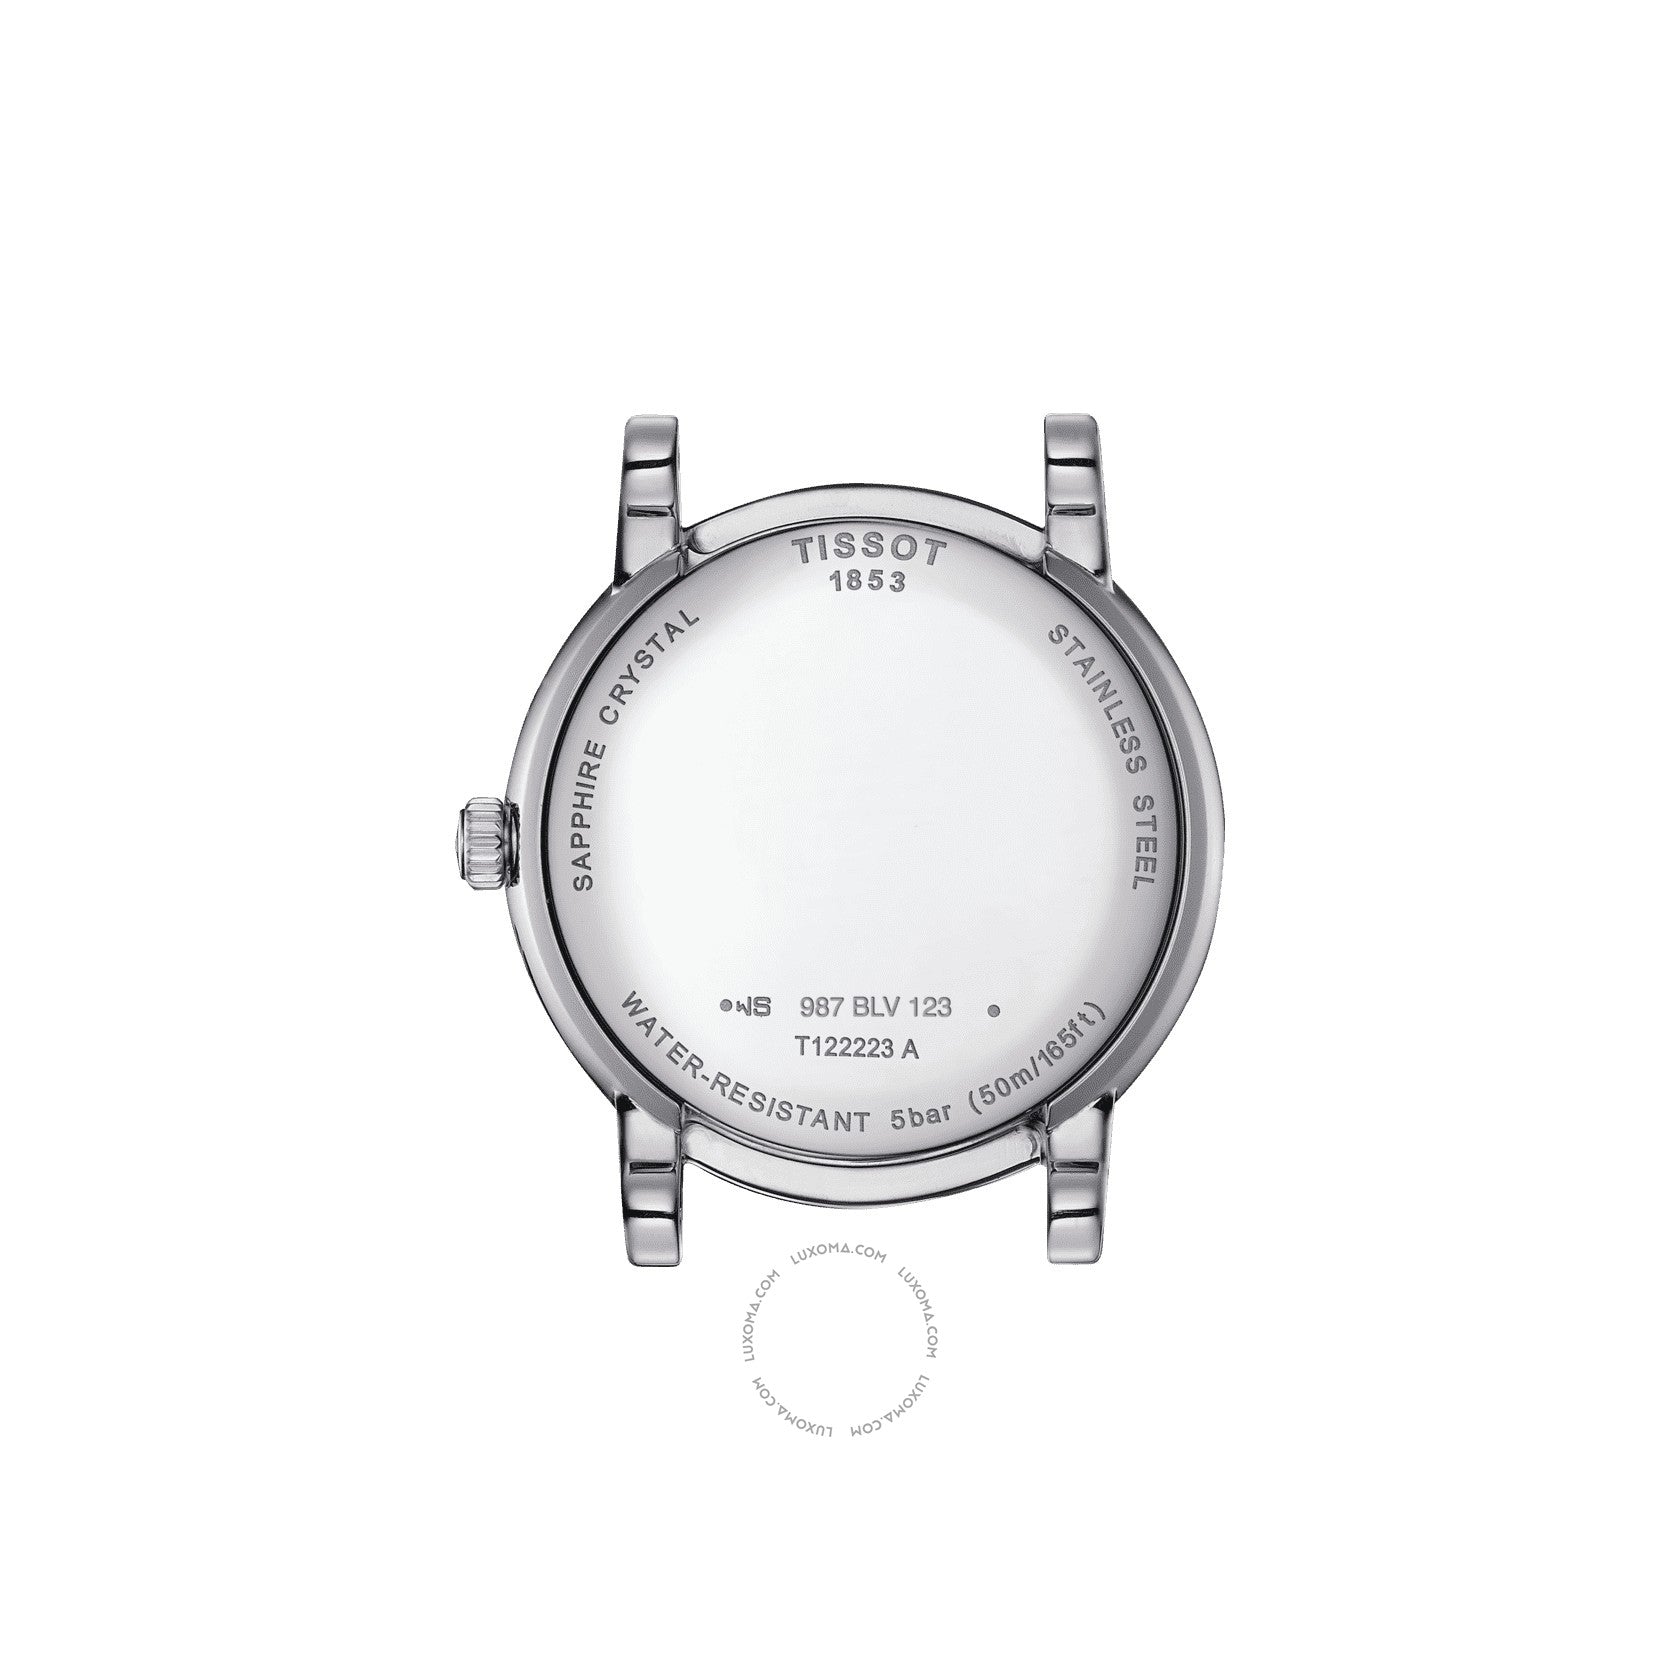 Tissot Tissot T-Classic Quartz Silver Dial Ladies Watch T122.223.11.033.00